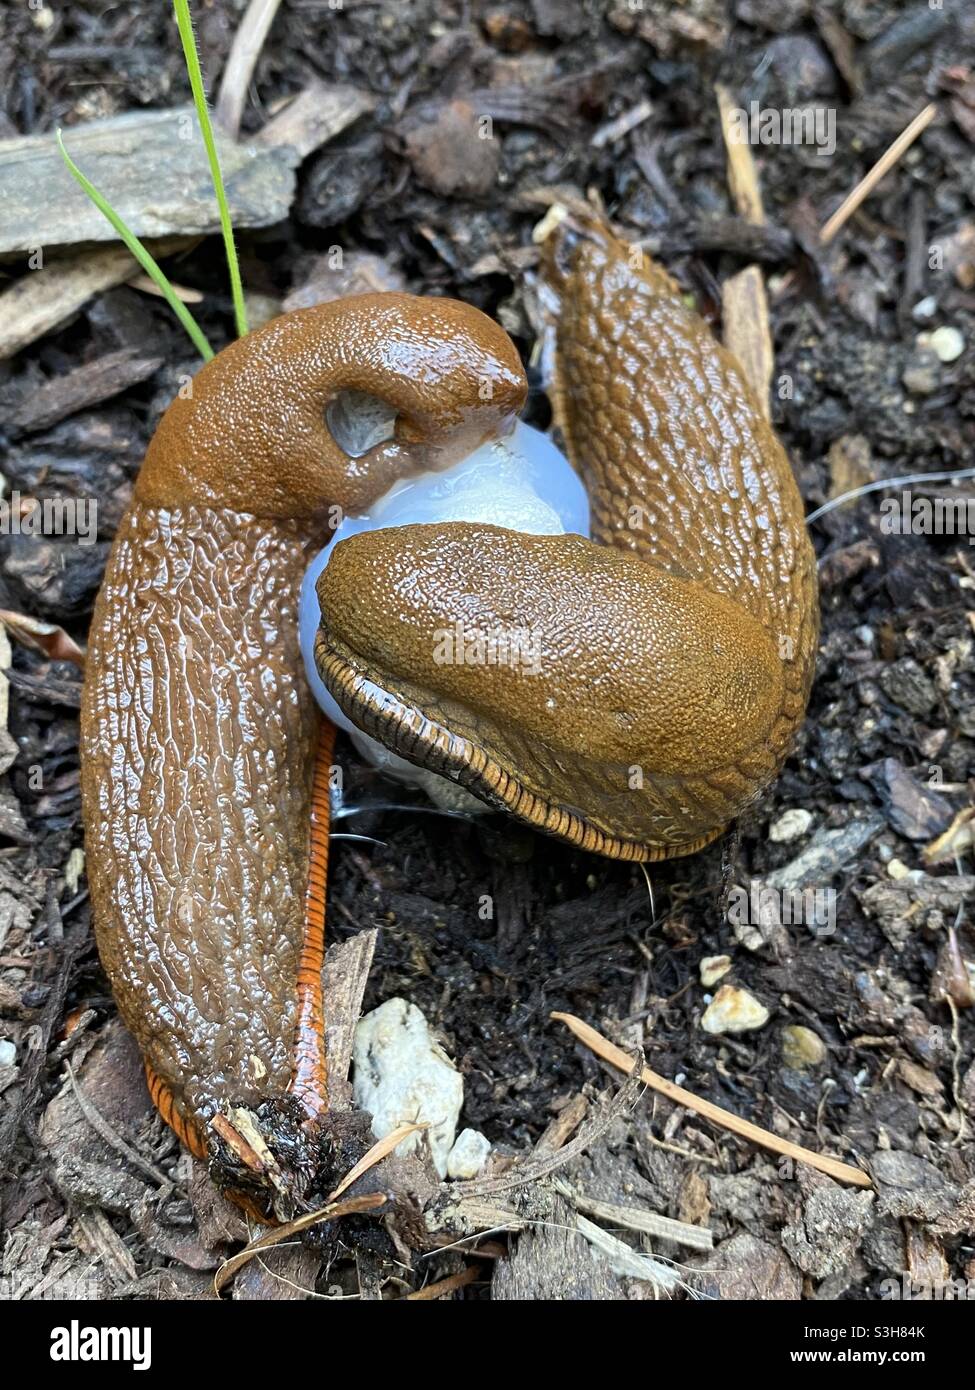 Two slugs mating. Stock Photo